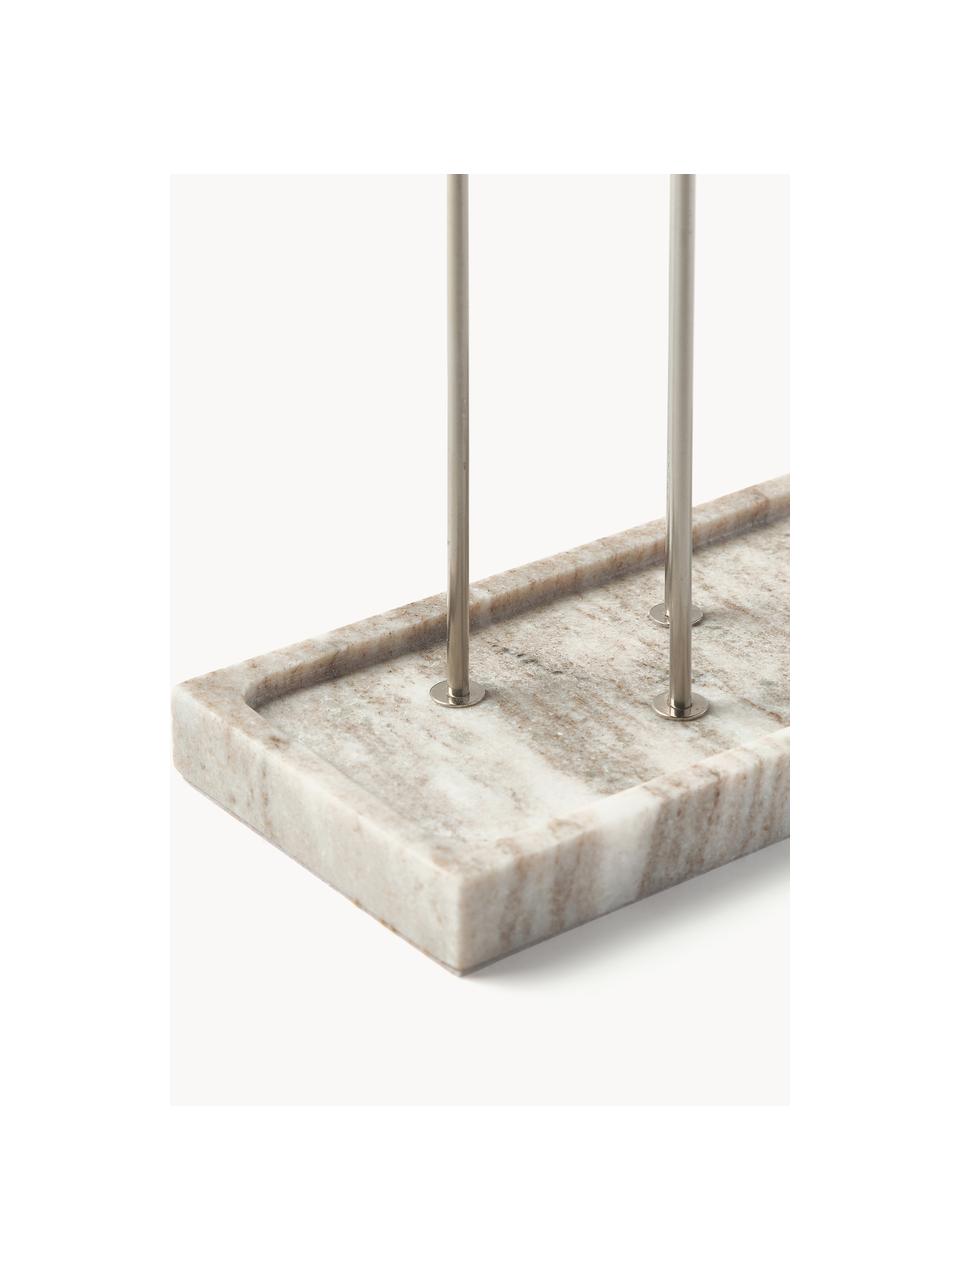 Sieradenhouder Terri van marmer, Houder: gecoat metaal, Plank: marmer, Beige, gemarmerd, zilverkleurig, B 33 x H 43 cm